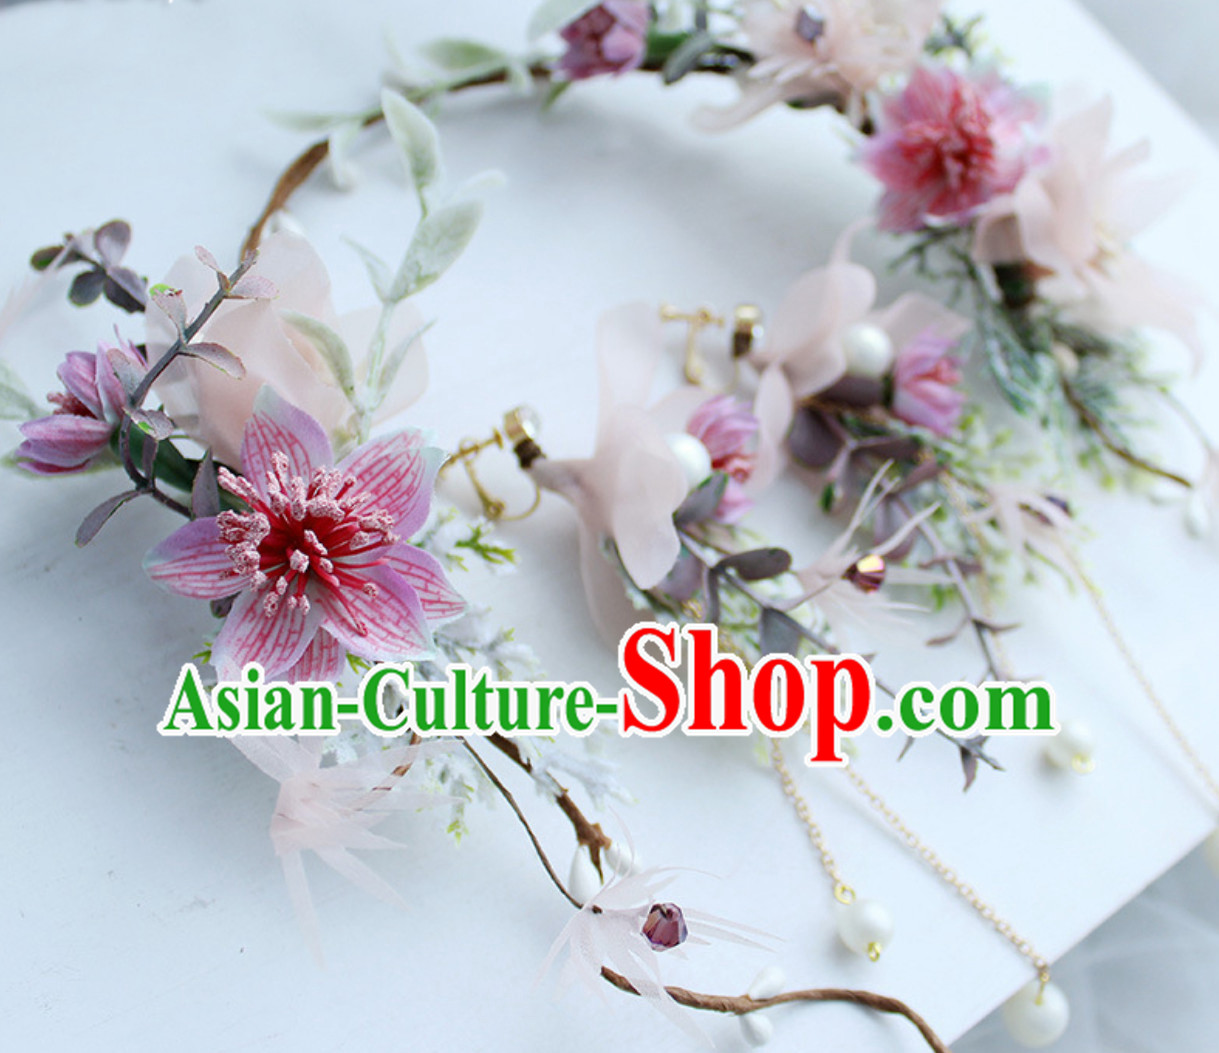 Romantic Princess Handmade Flower Crown and Earrings Set